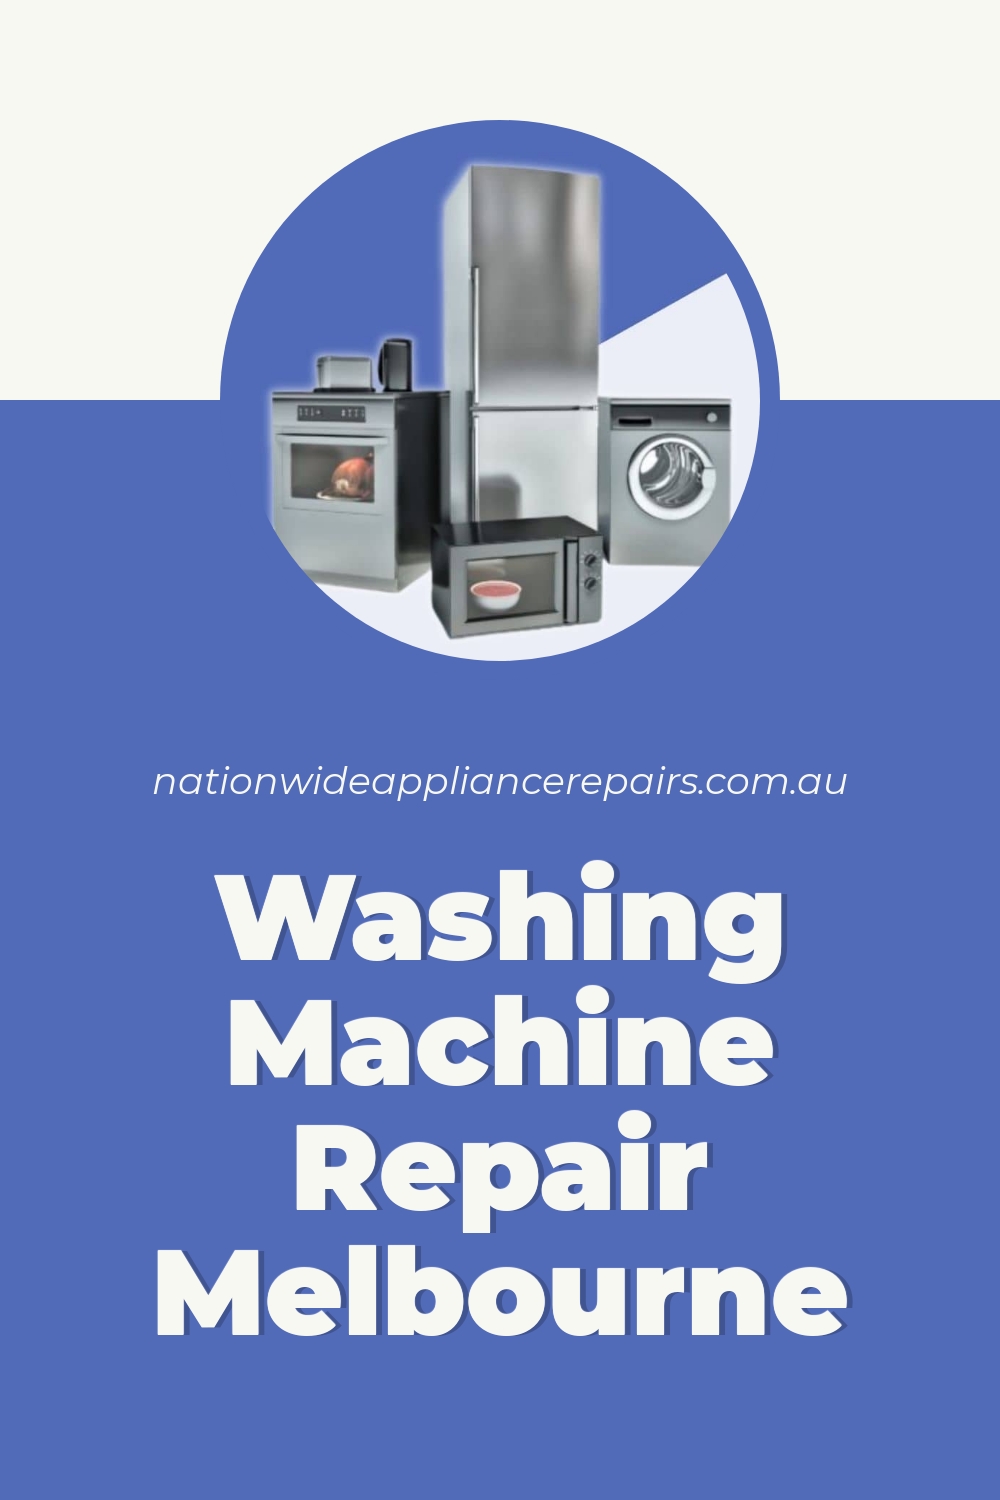 Washing Machine Repair Melbourne